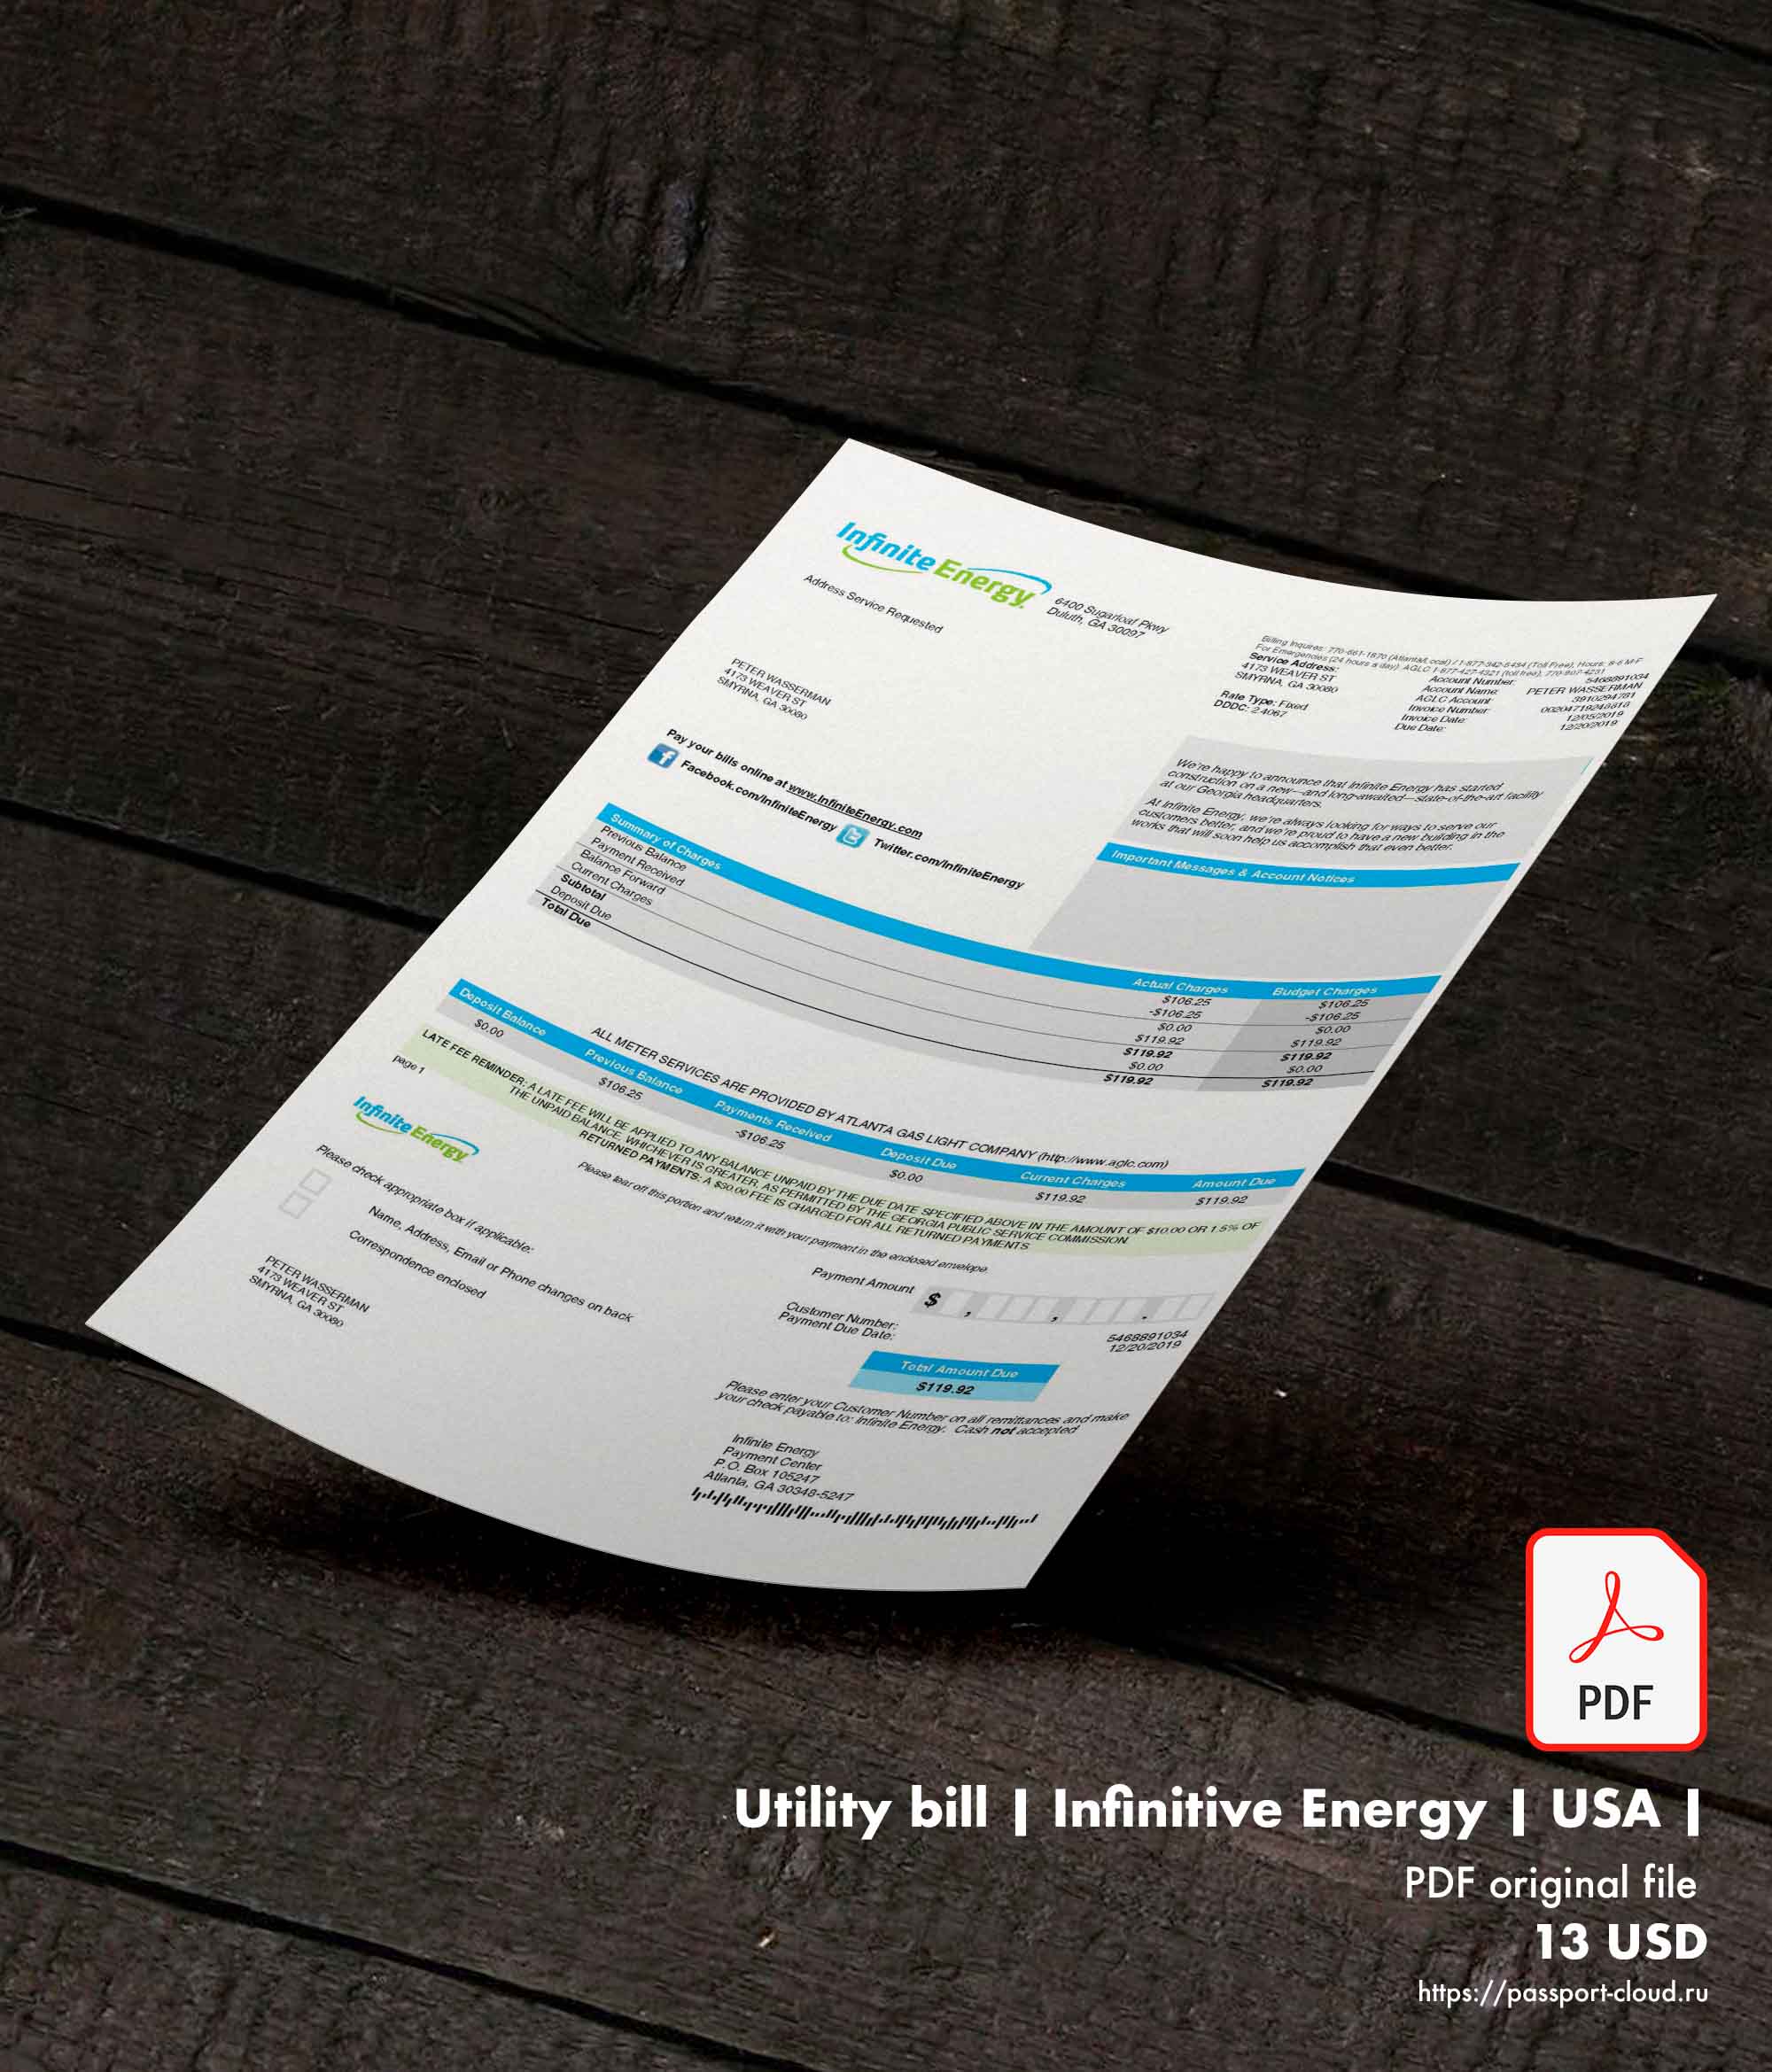 Utility bill | Infinitive Energy | USA |-0